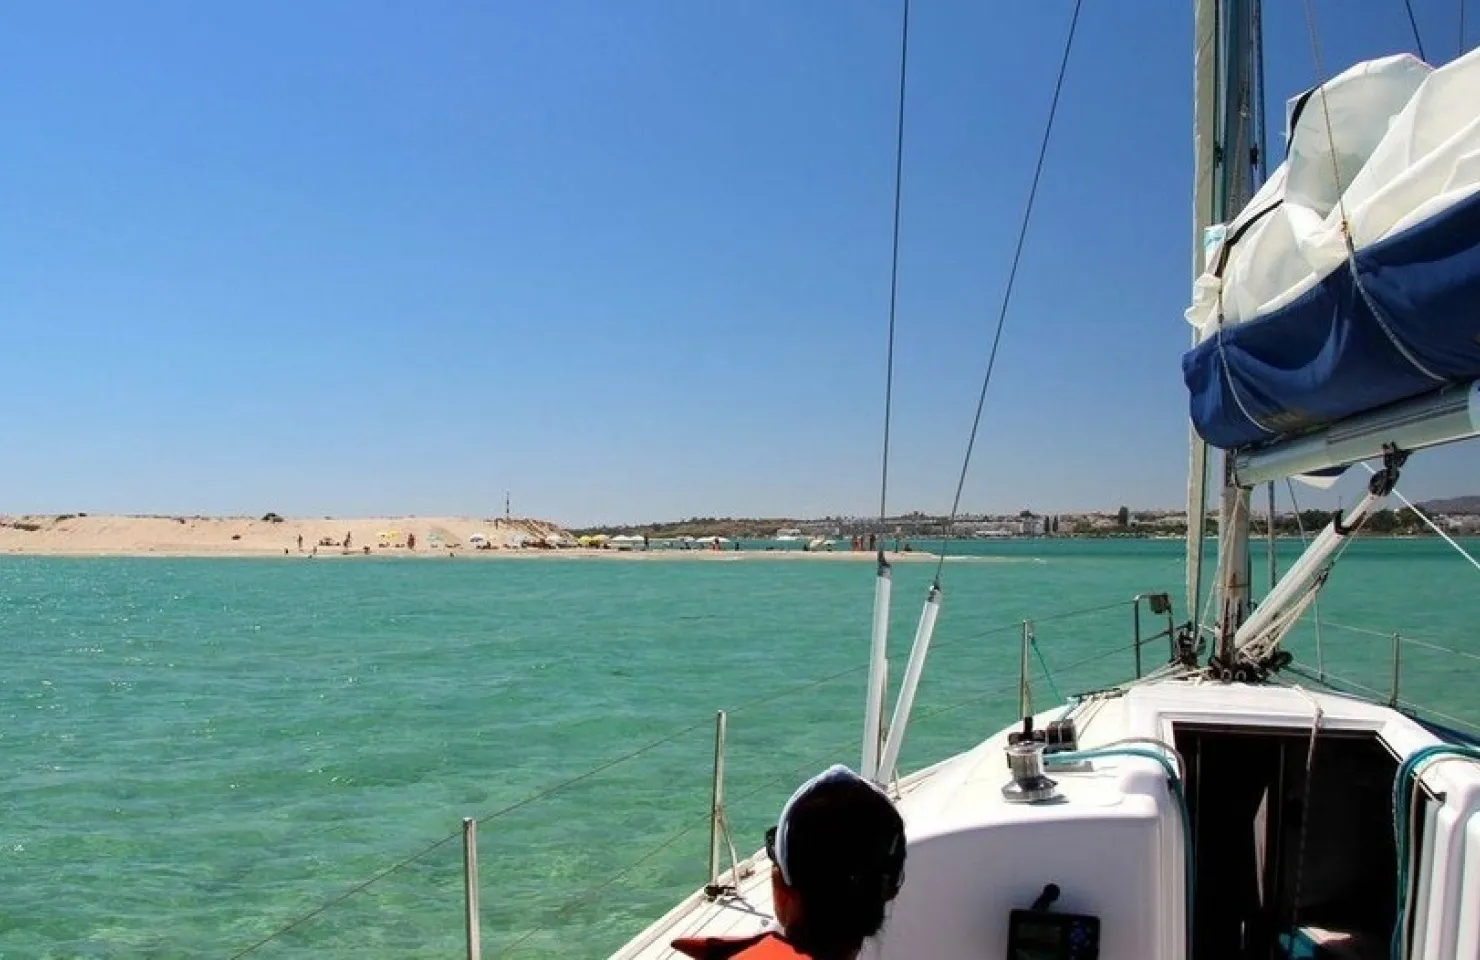 Half Day Sailing Tour in Formosa - Algarve's Ria Formosa: Ultimate Activity Guide